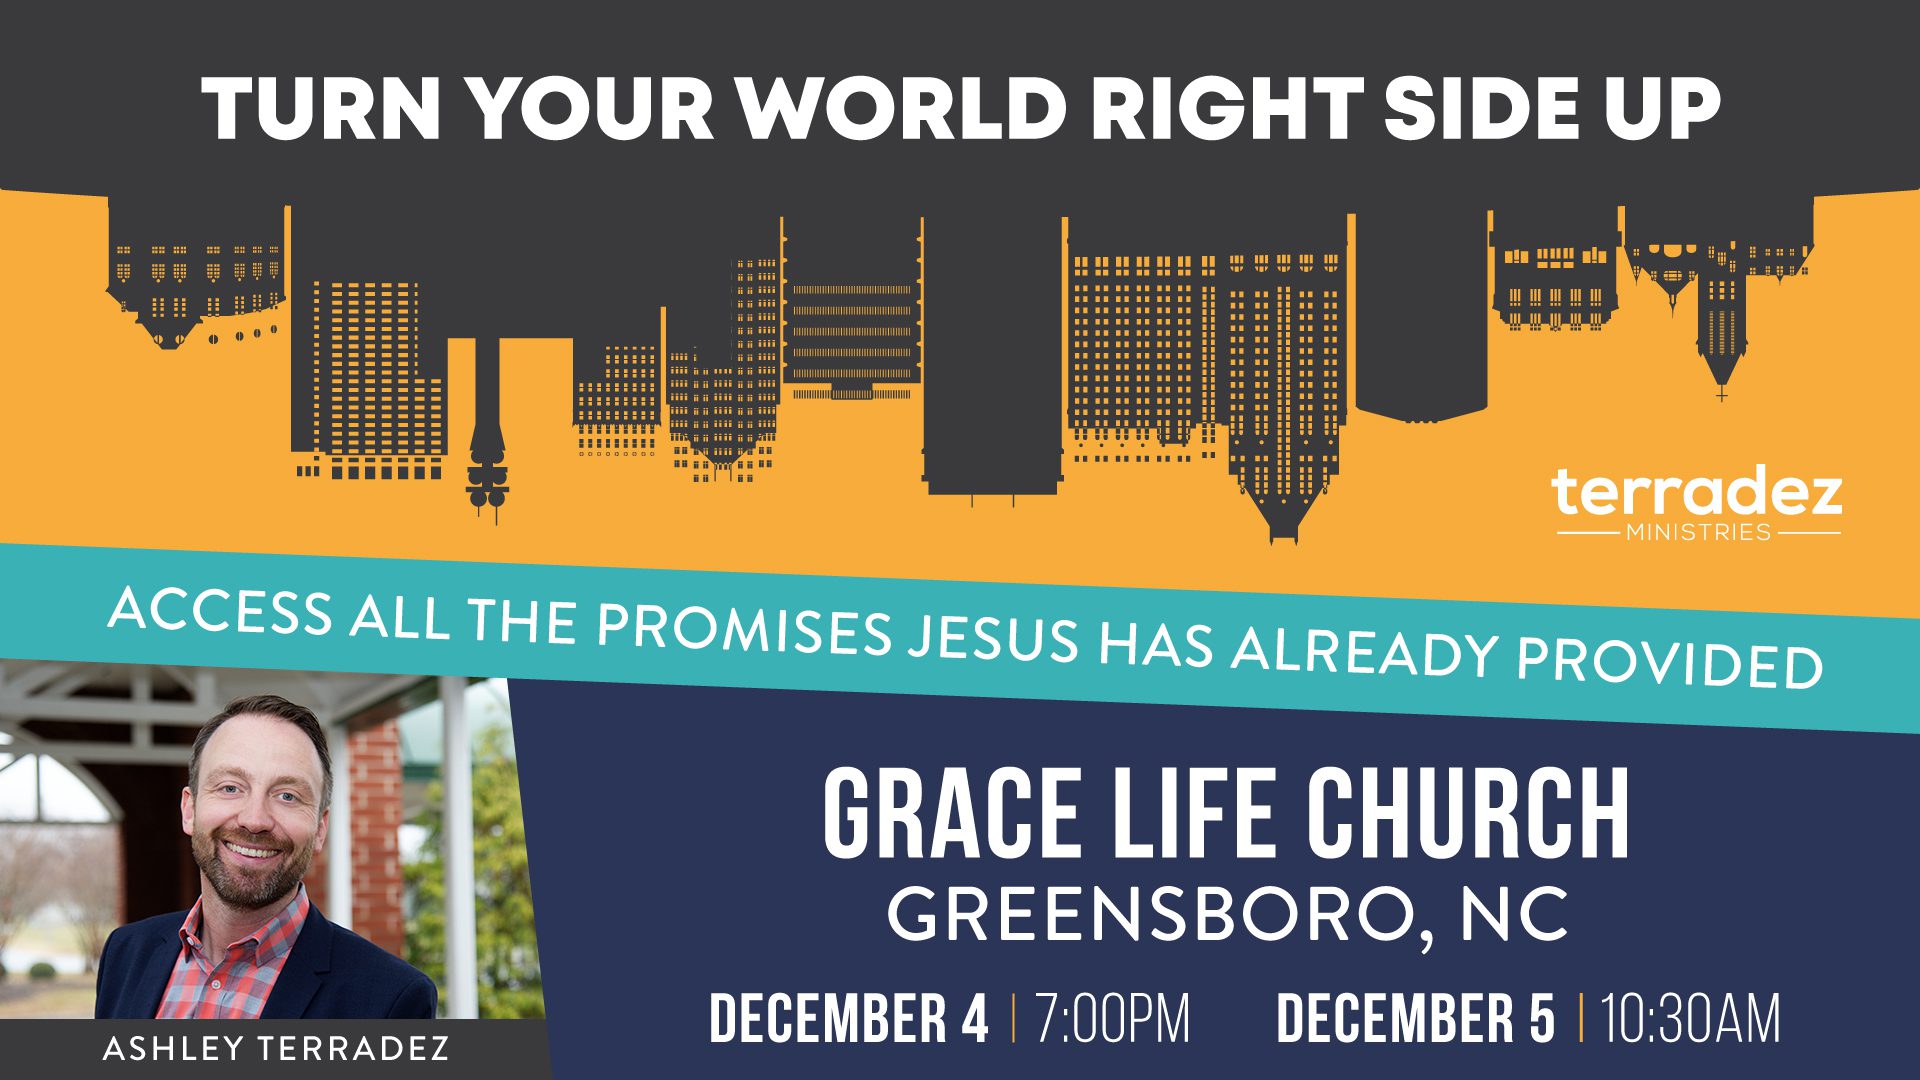 Ashley Terradez at Grace Life Church in Greensboro, NC on December 4-5, 2021.